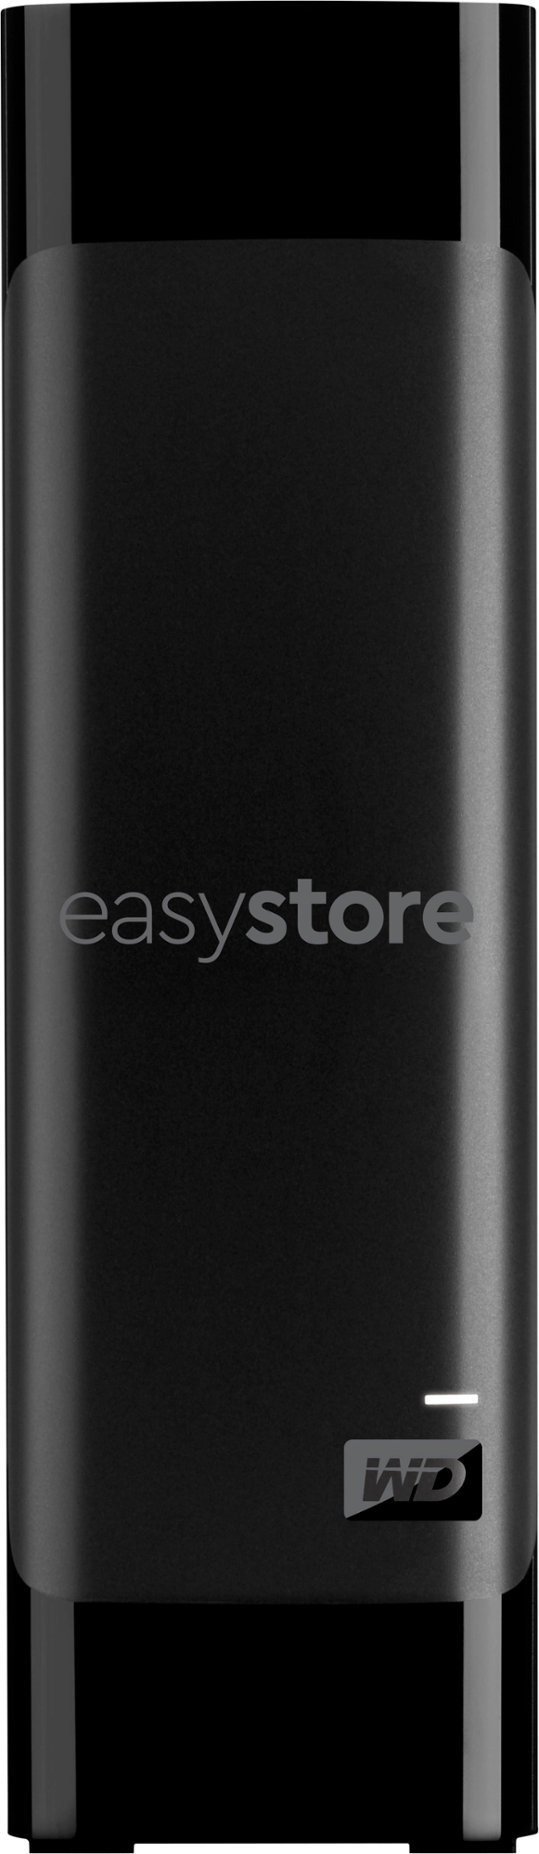 WD easystore 18TB External USB 3.0